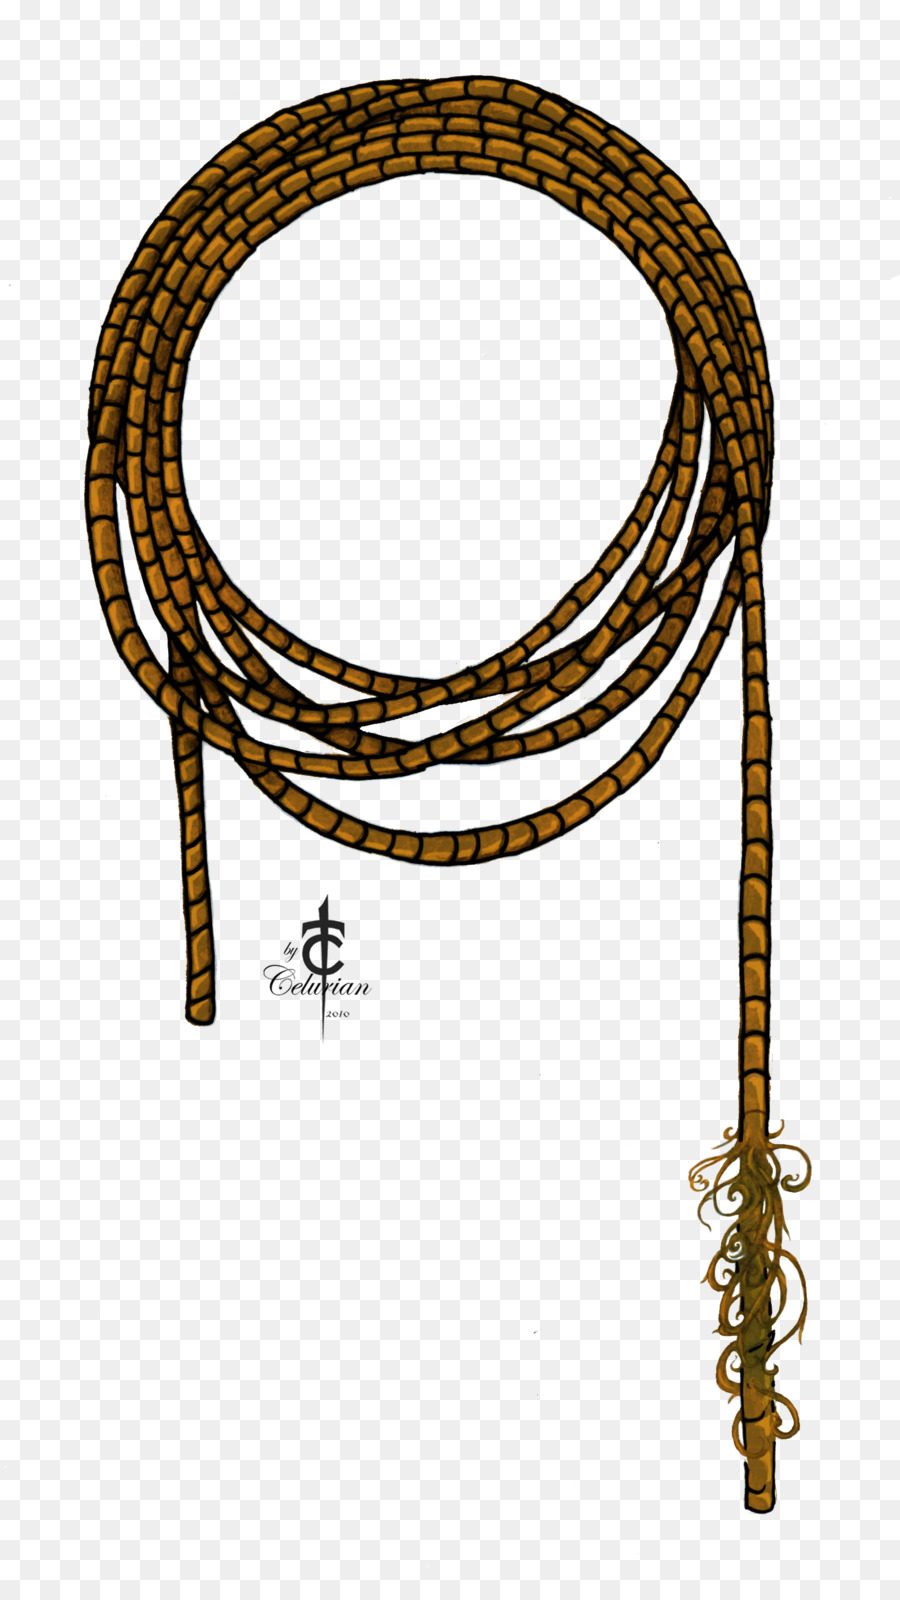 Lasso Rope Cowboy Clip art - rope png download - 1557*2740 - Free Transparent Lasso png Download.